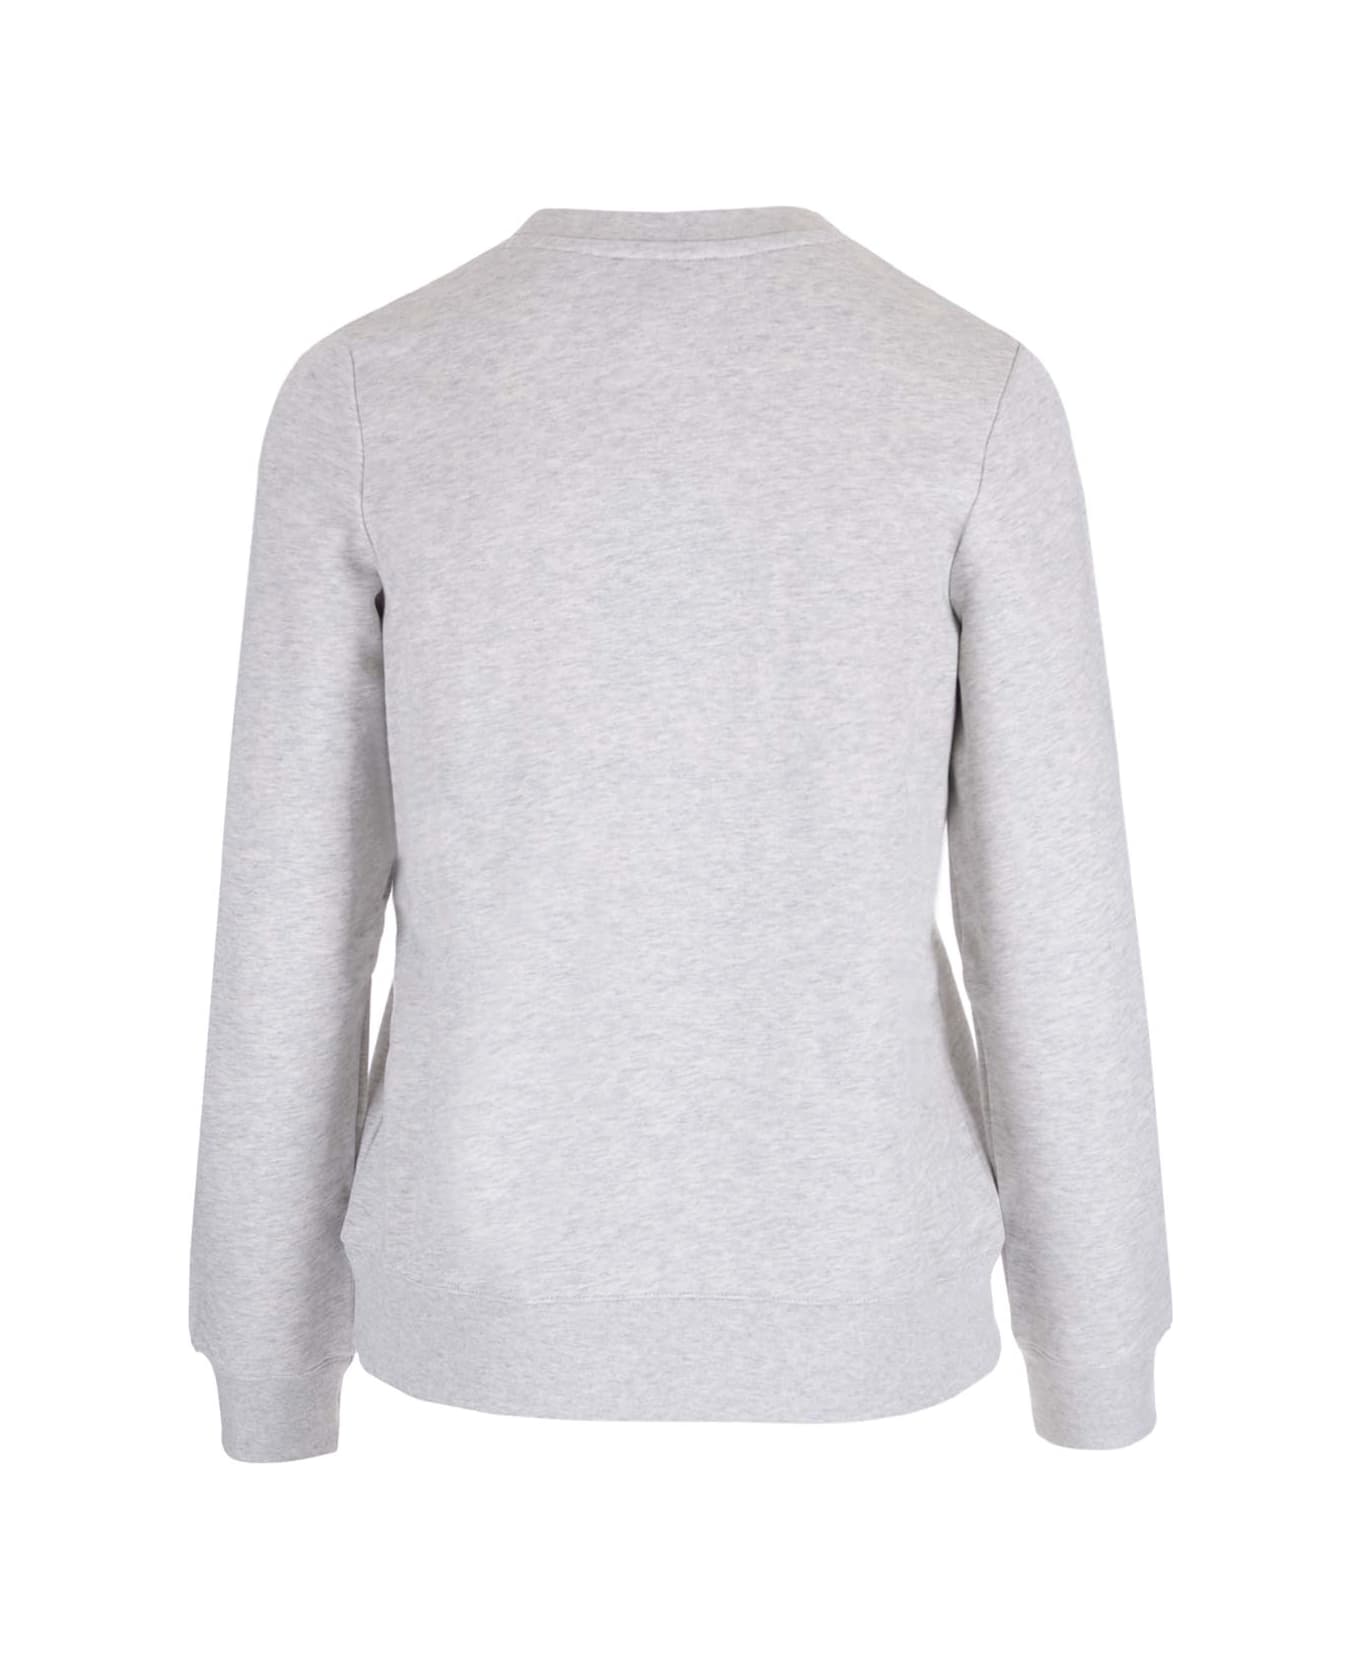 A.P.C. Skye Sweatshirt - Grey